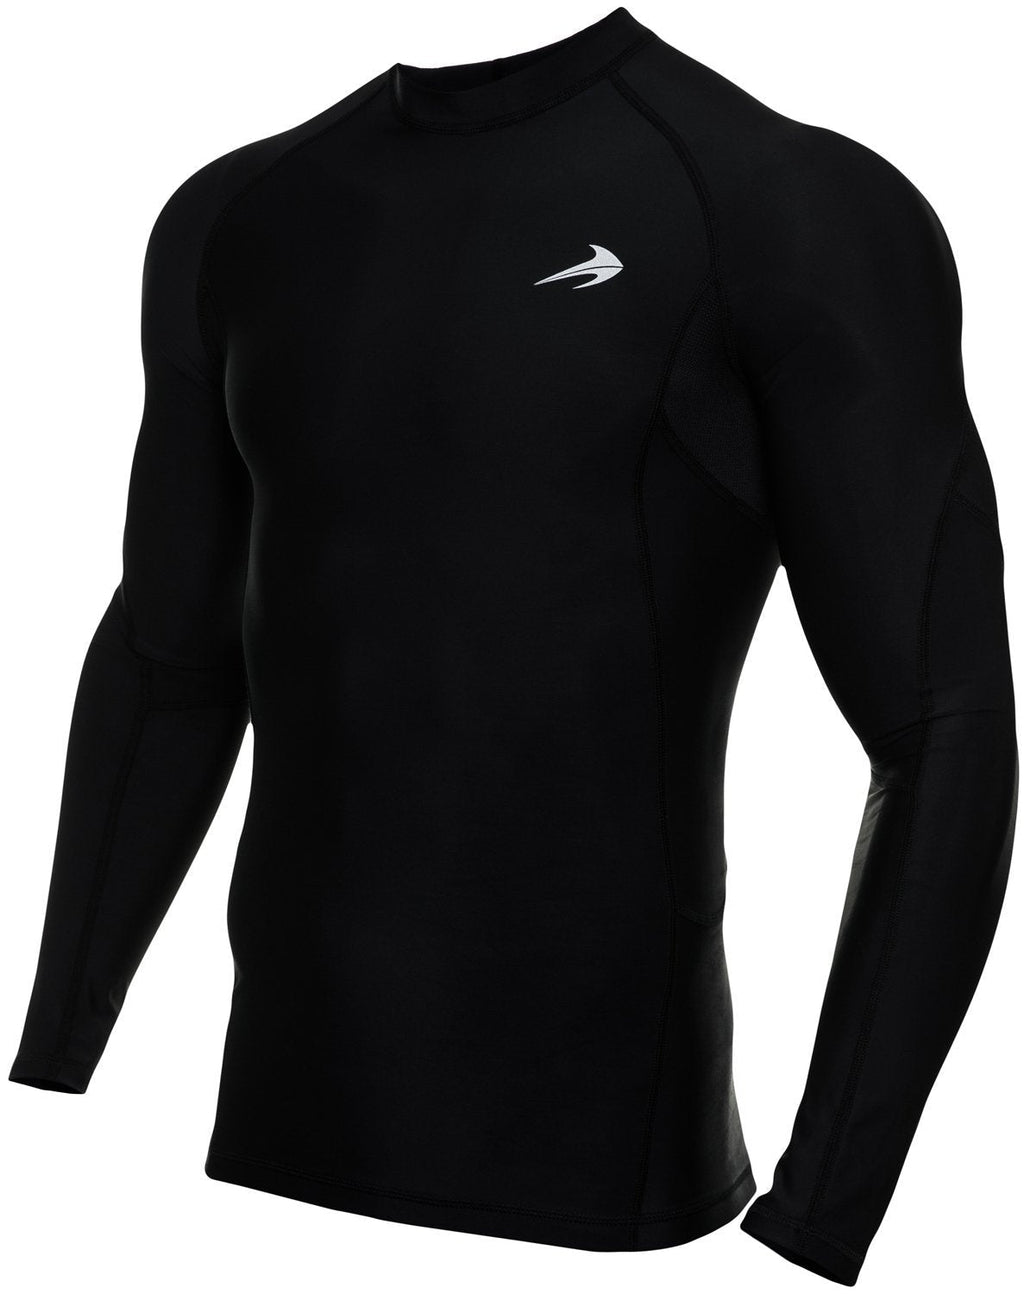 [AUSTRALIA] - CompressionZ Mens Quick Dry Compression Long Sleeve Baselayer Athletic Shirt Black X-Large 